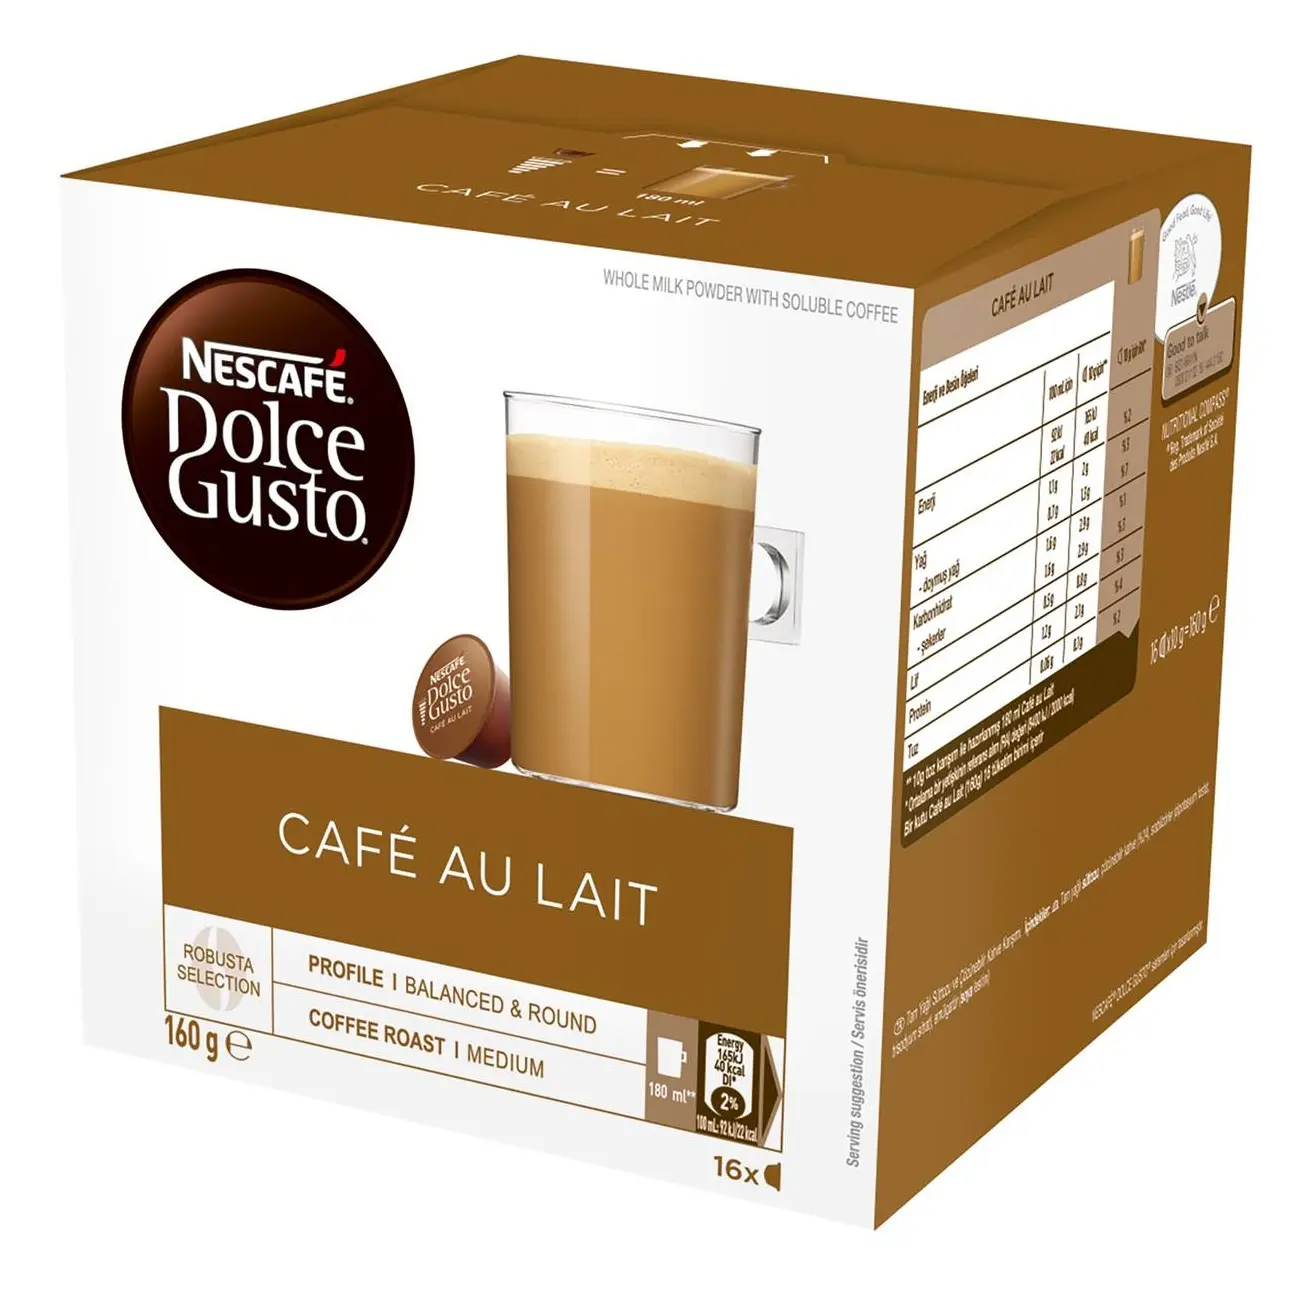 Nescafe Dolce Gusto Cafe au Lait Coffee x16 pods